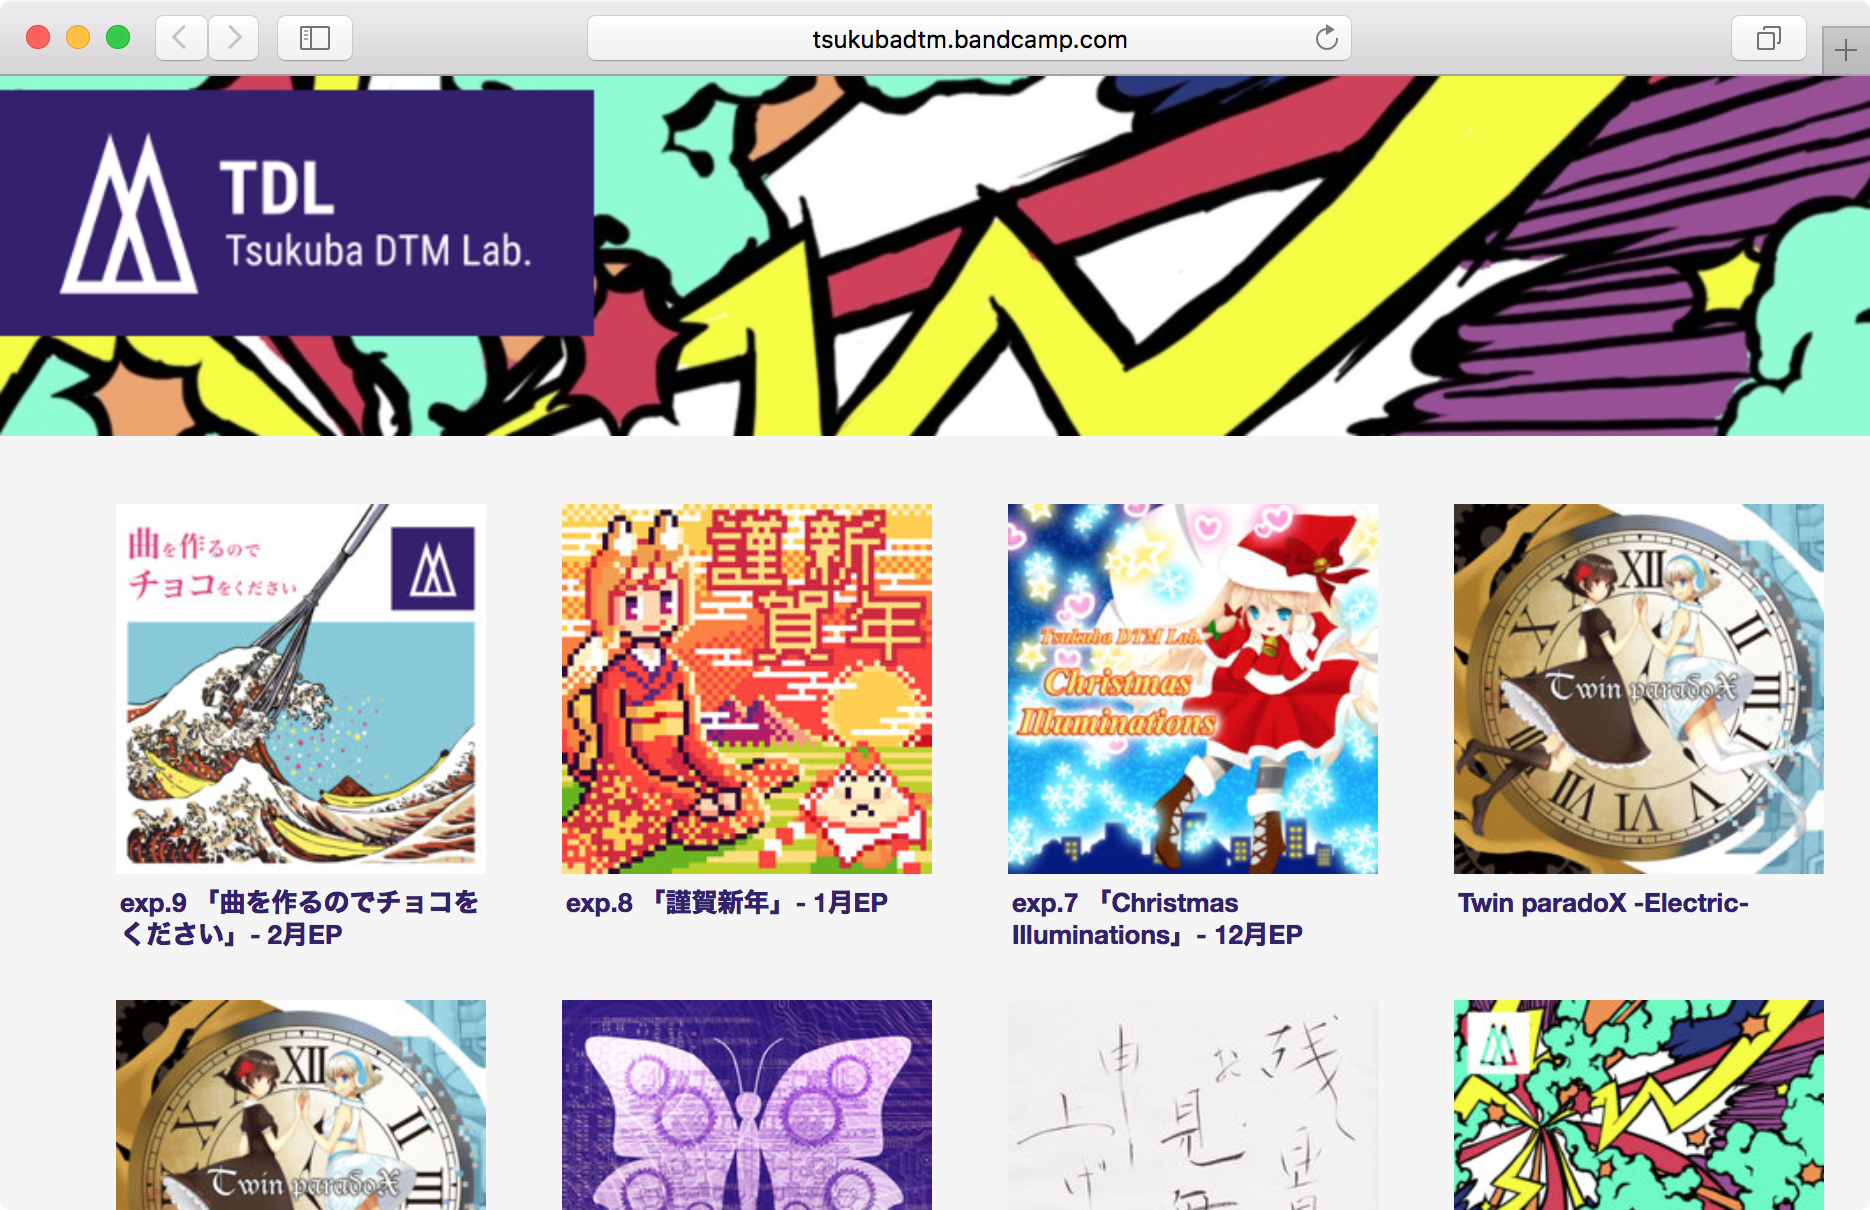 Website of Tsukuba DTM Laboratory